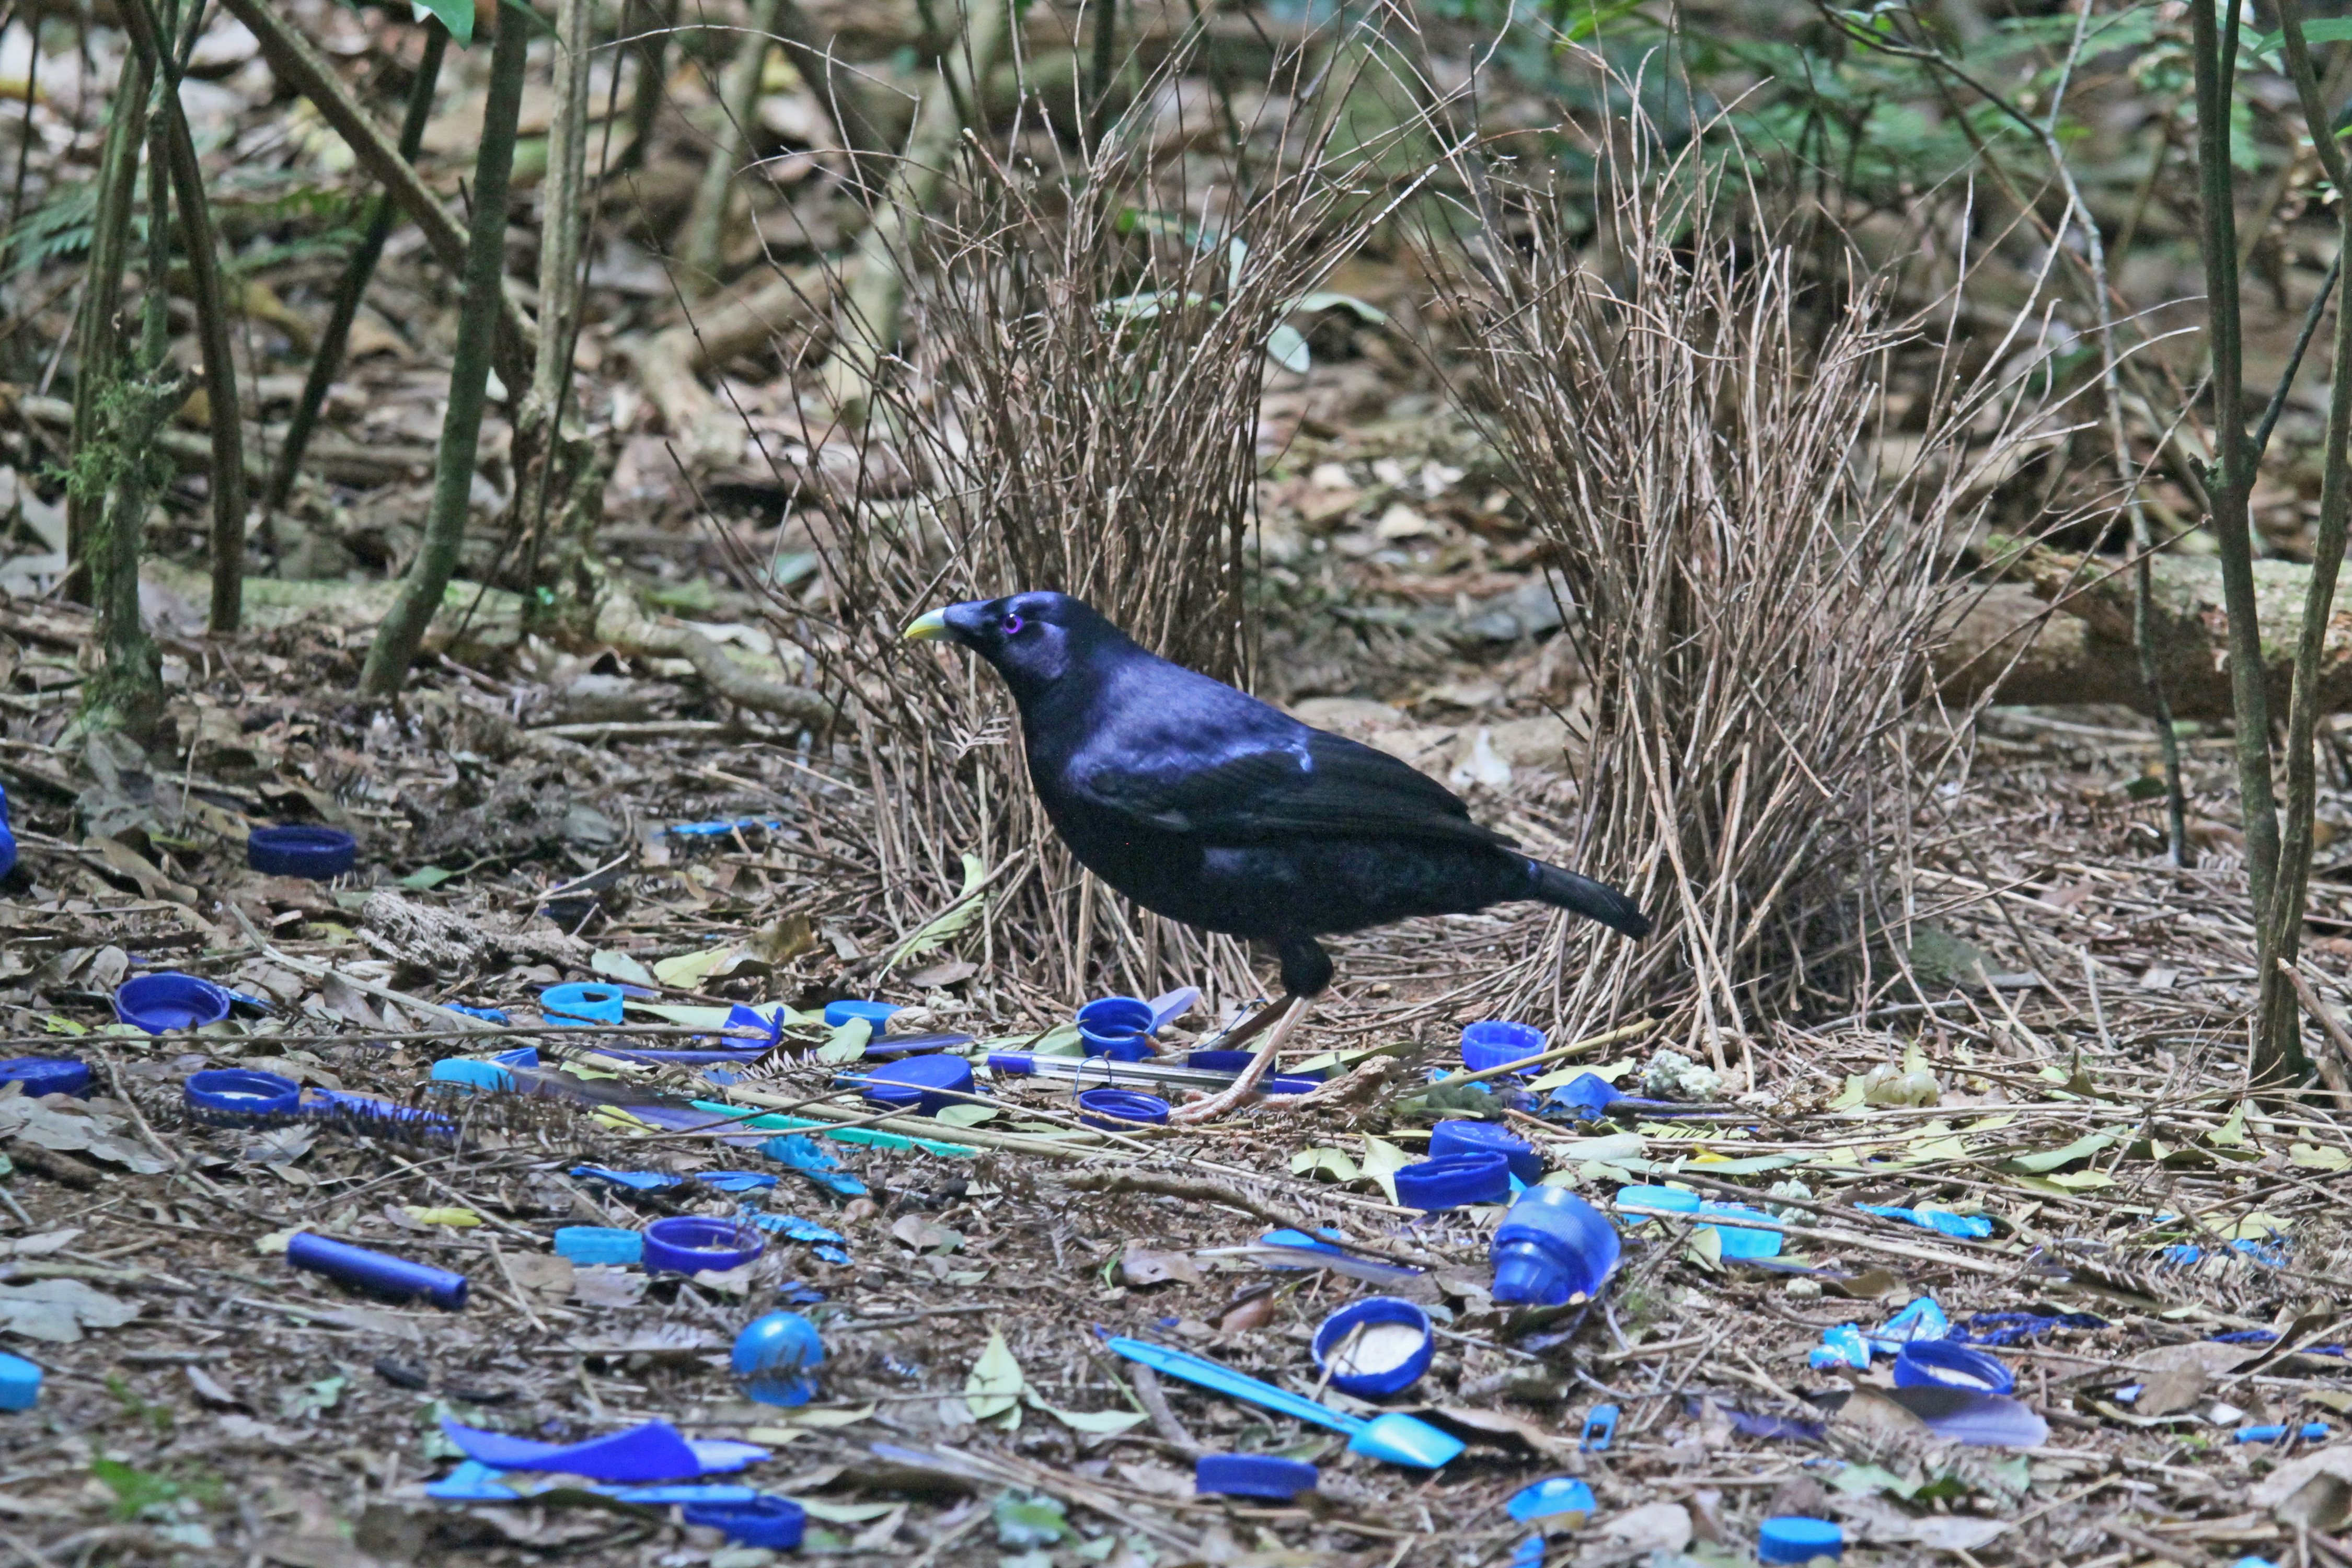 Satin bowerbird - Wikipedia